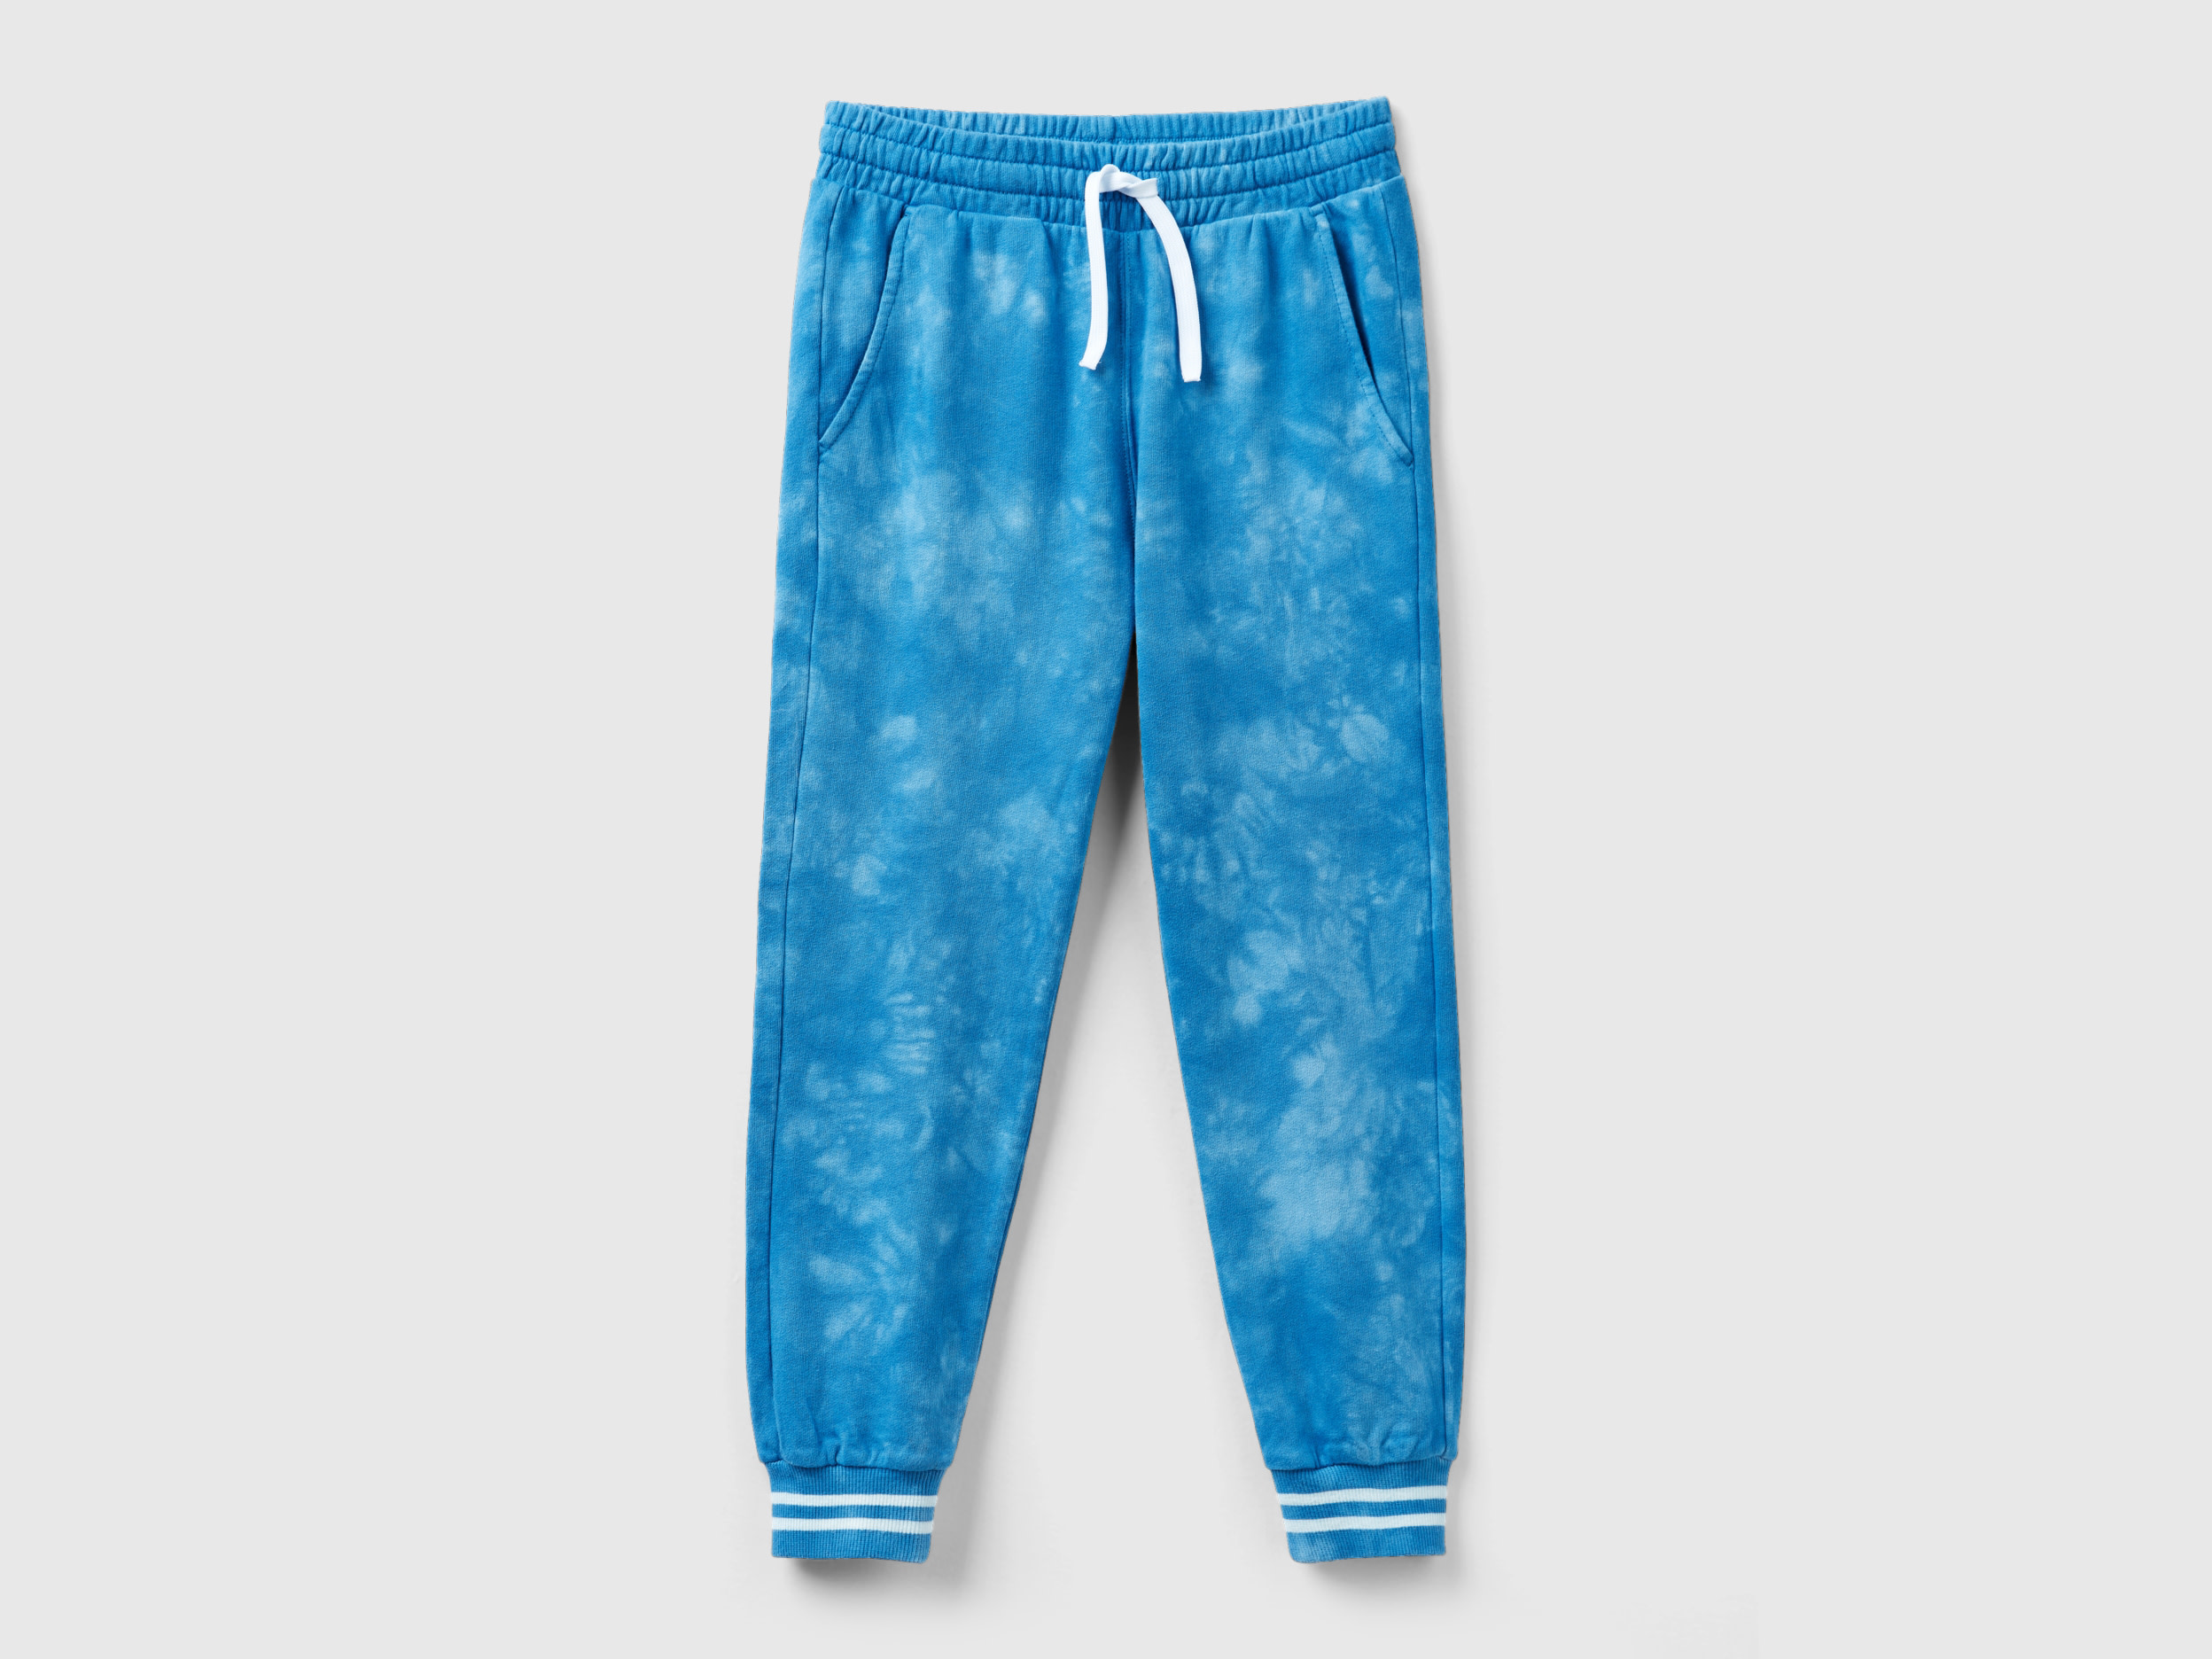 Benetton, Tie-dye Sweatpants, size 2XL, Light Blue, Kids